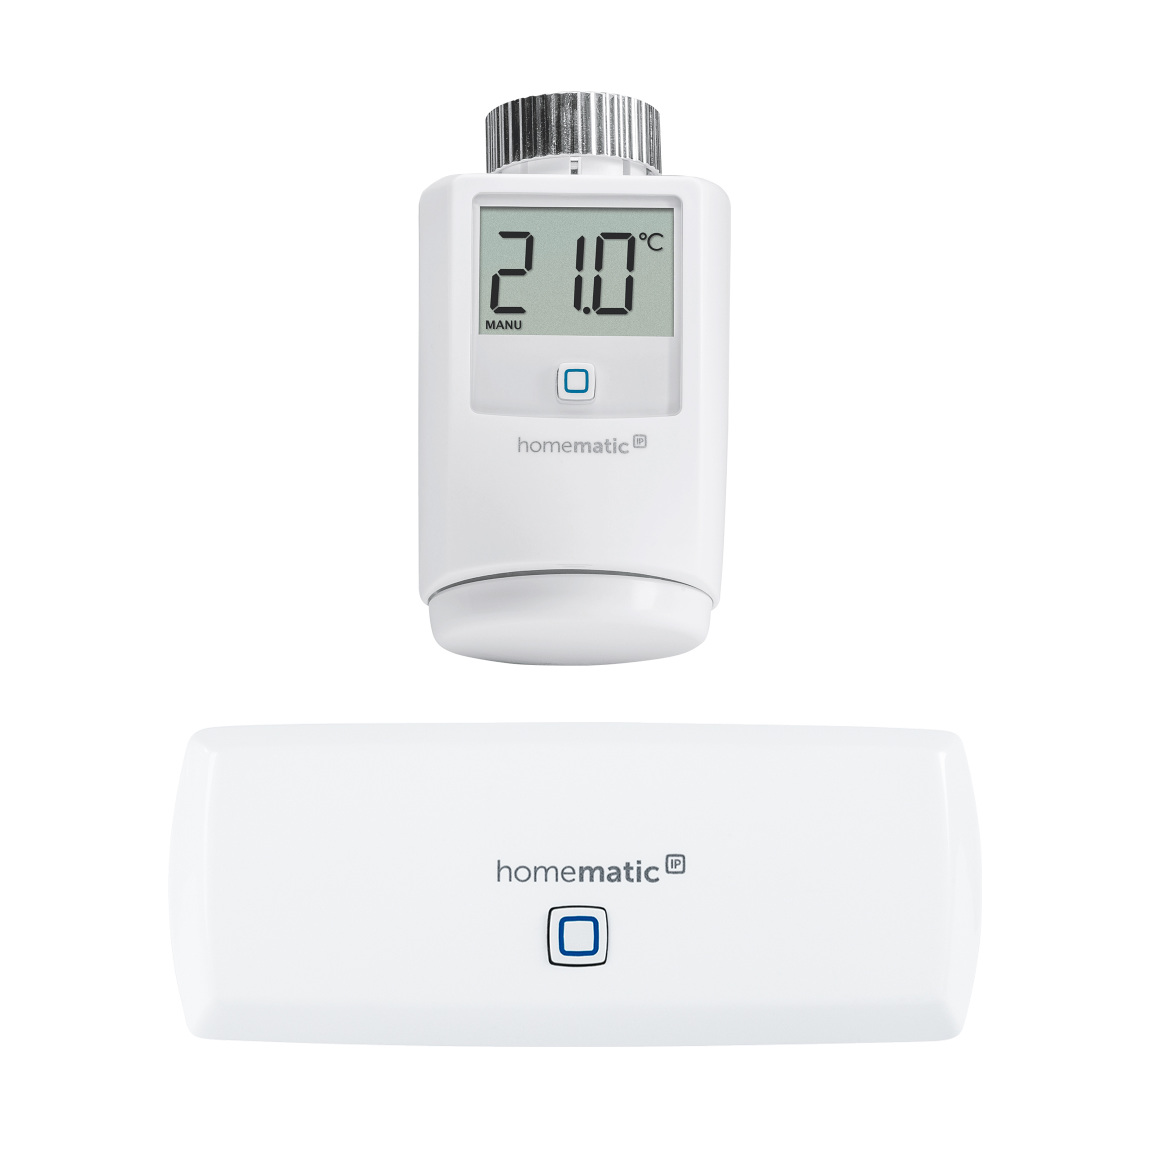 Homematic IP WLAN Access Point + Heizkörper Thermostat - weiß